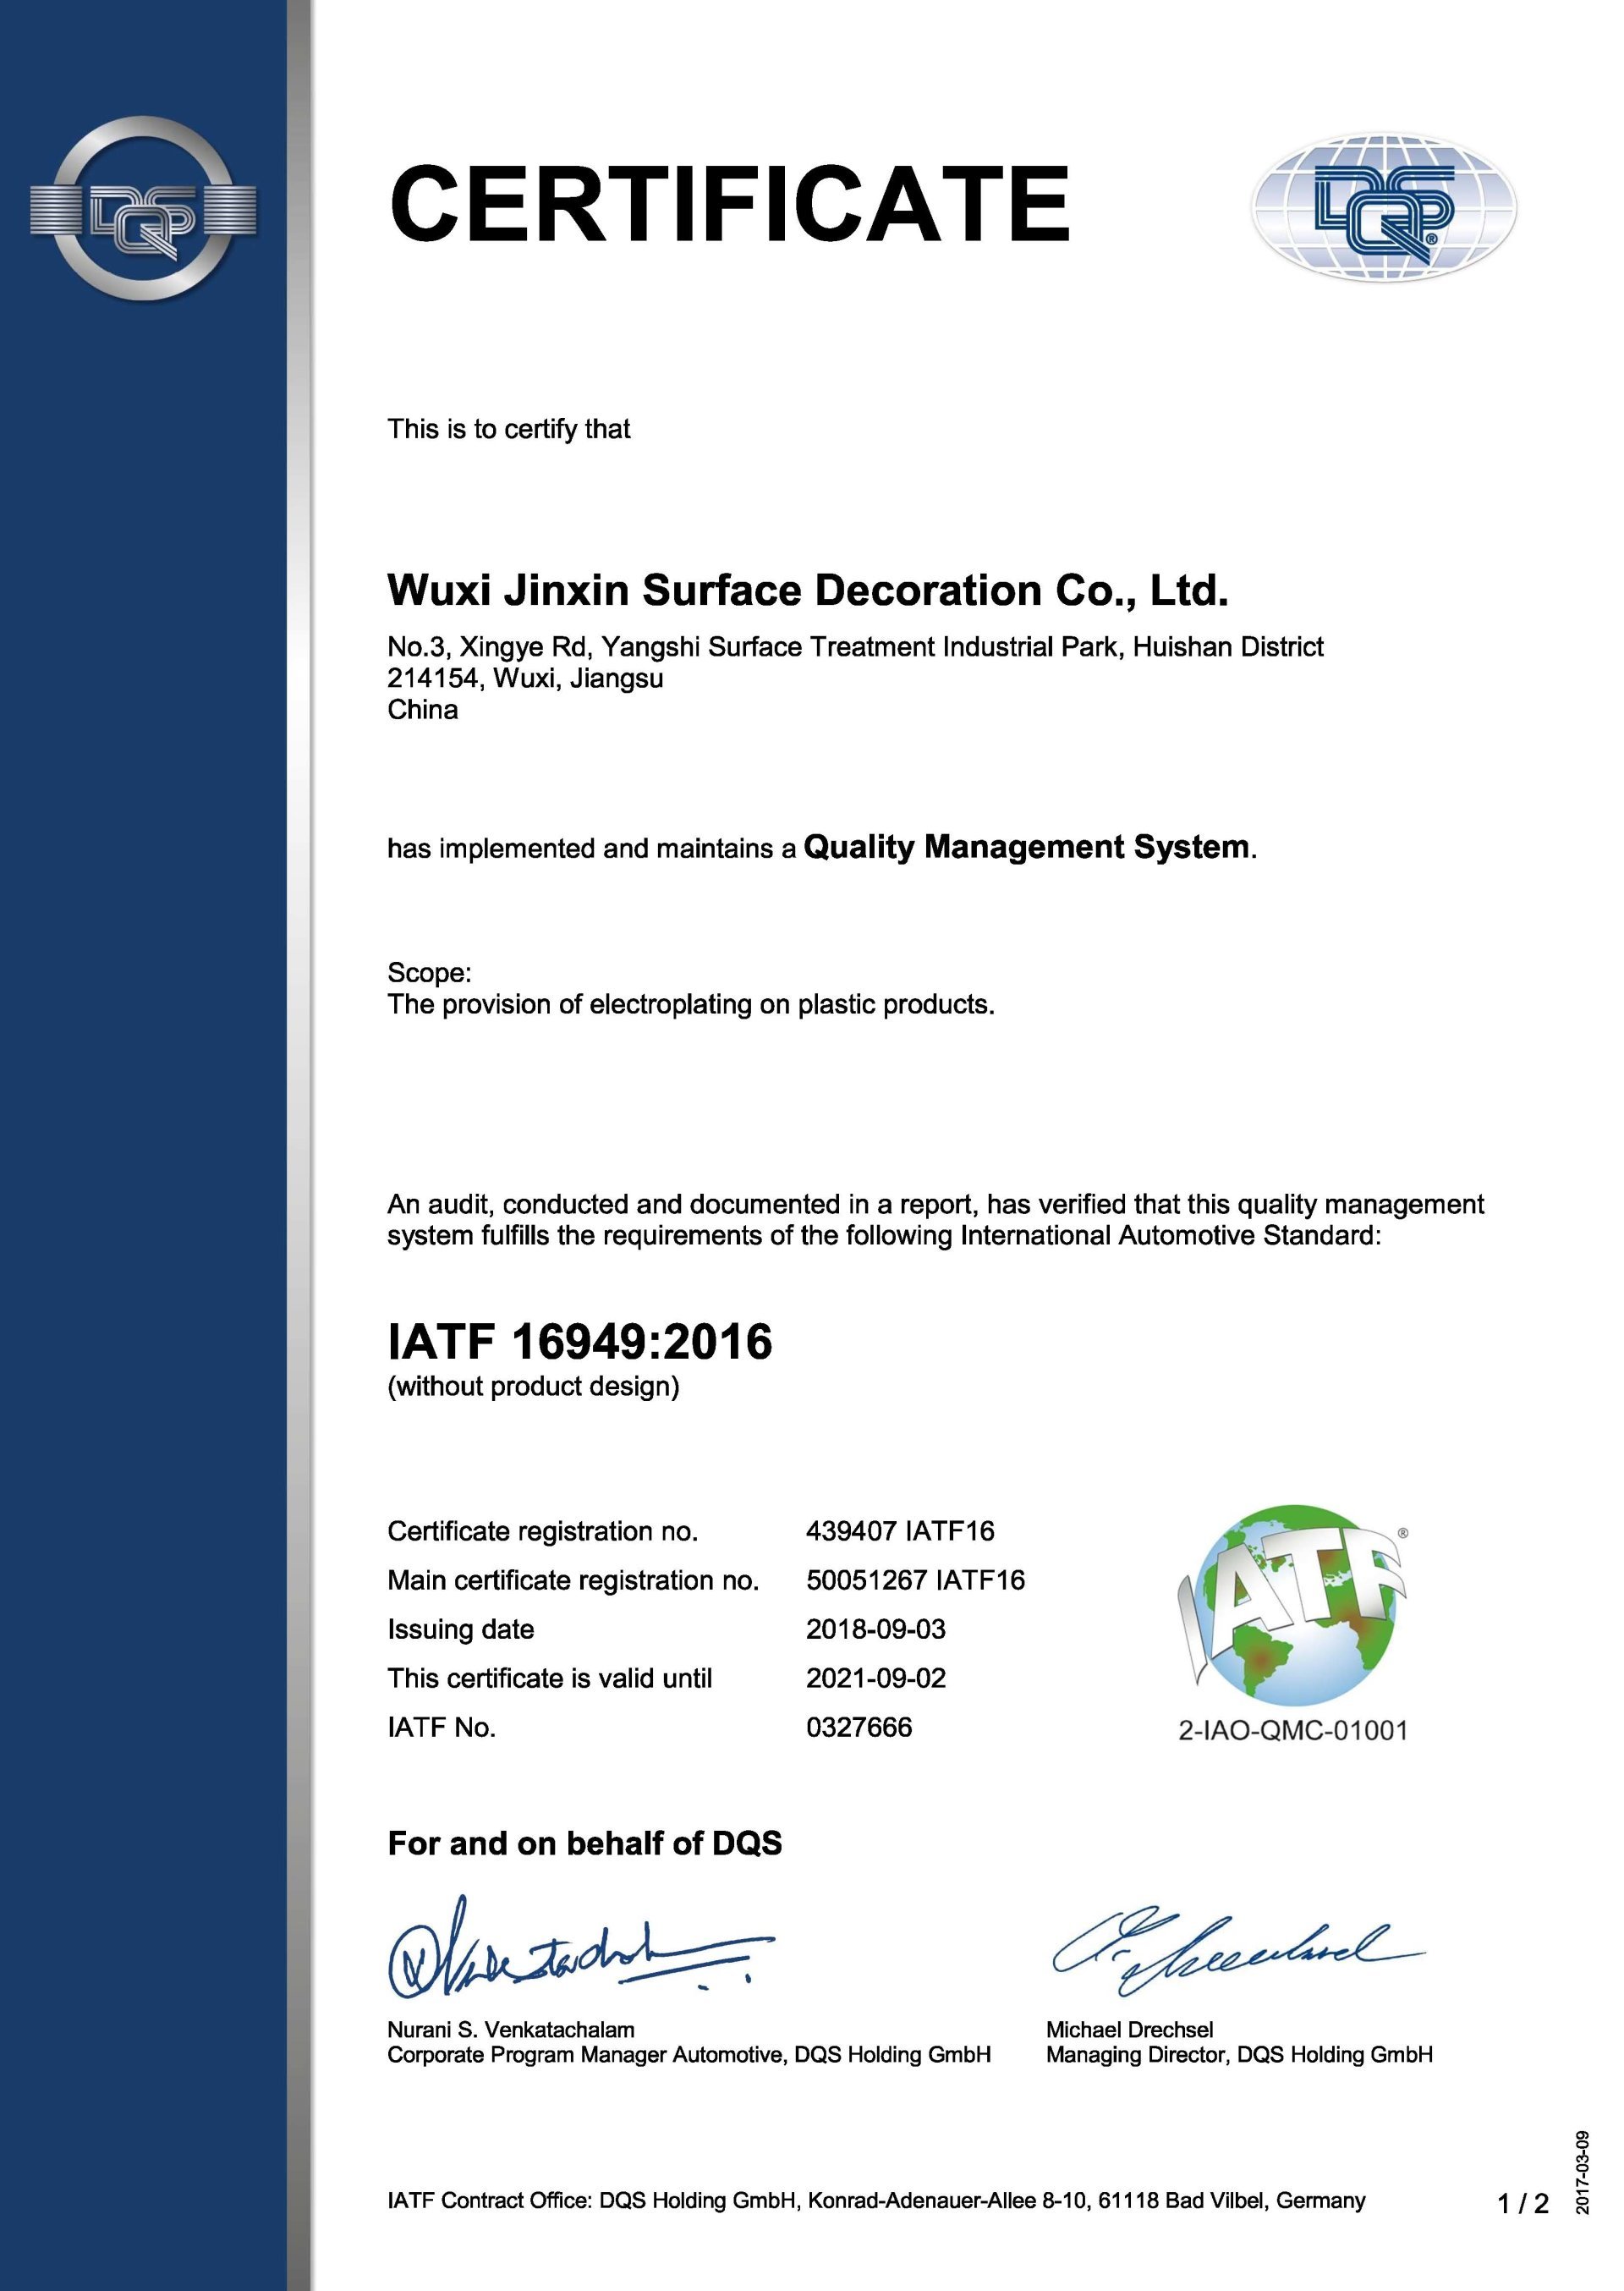 IATF 16949 Certificate of Wuxin Jinxin Surface Decoration Co., Ltd.